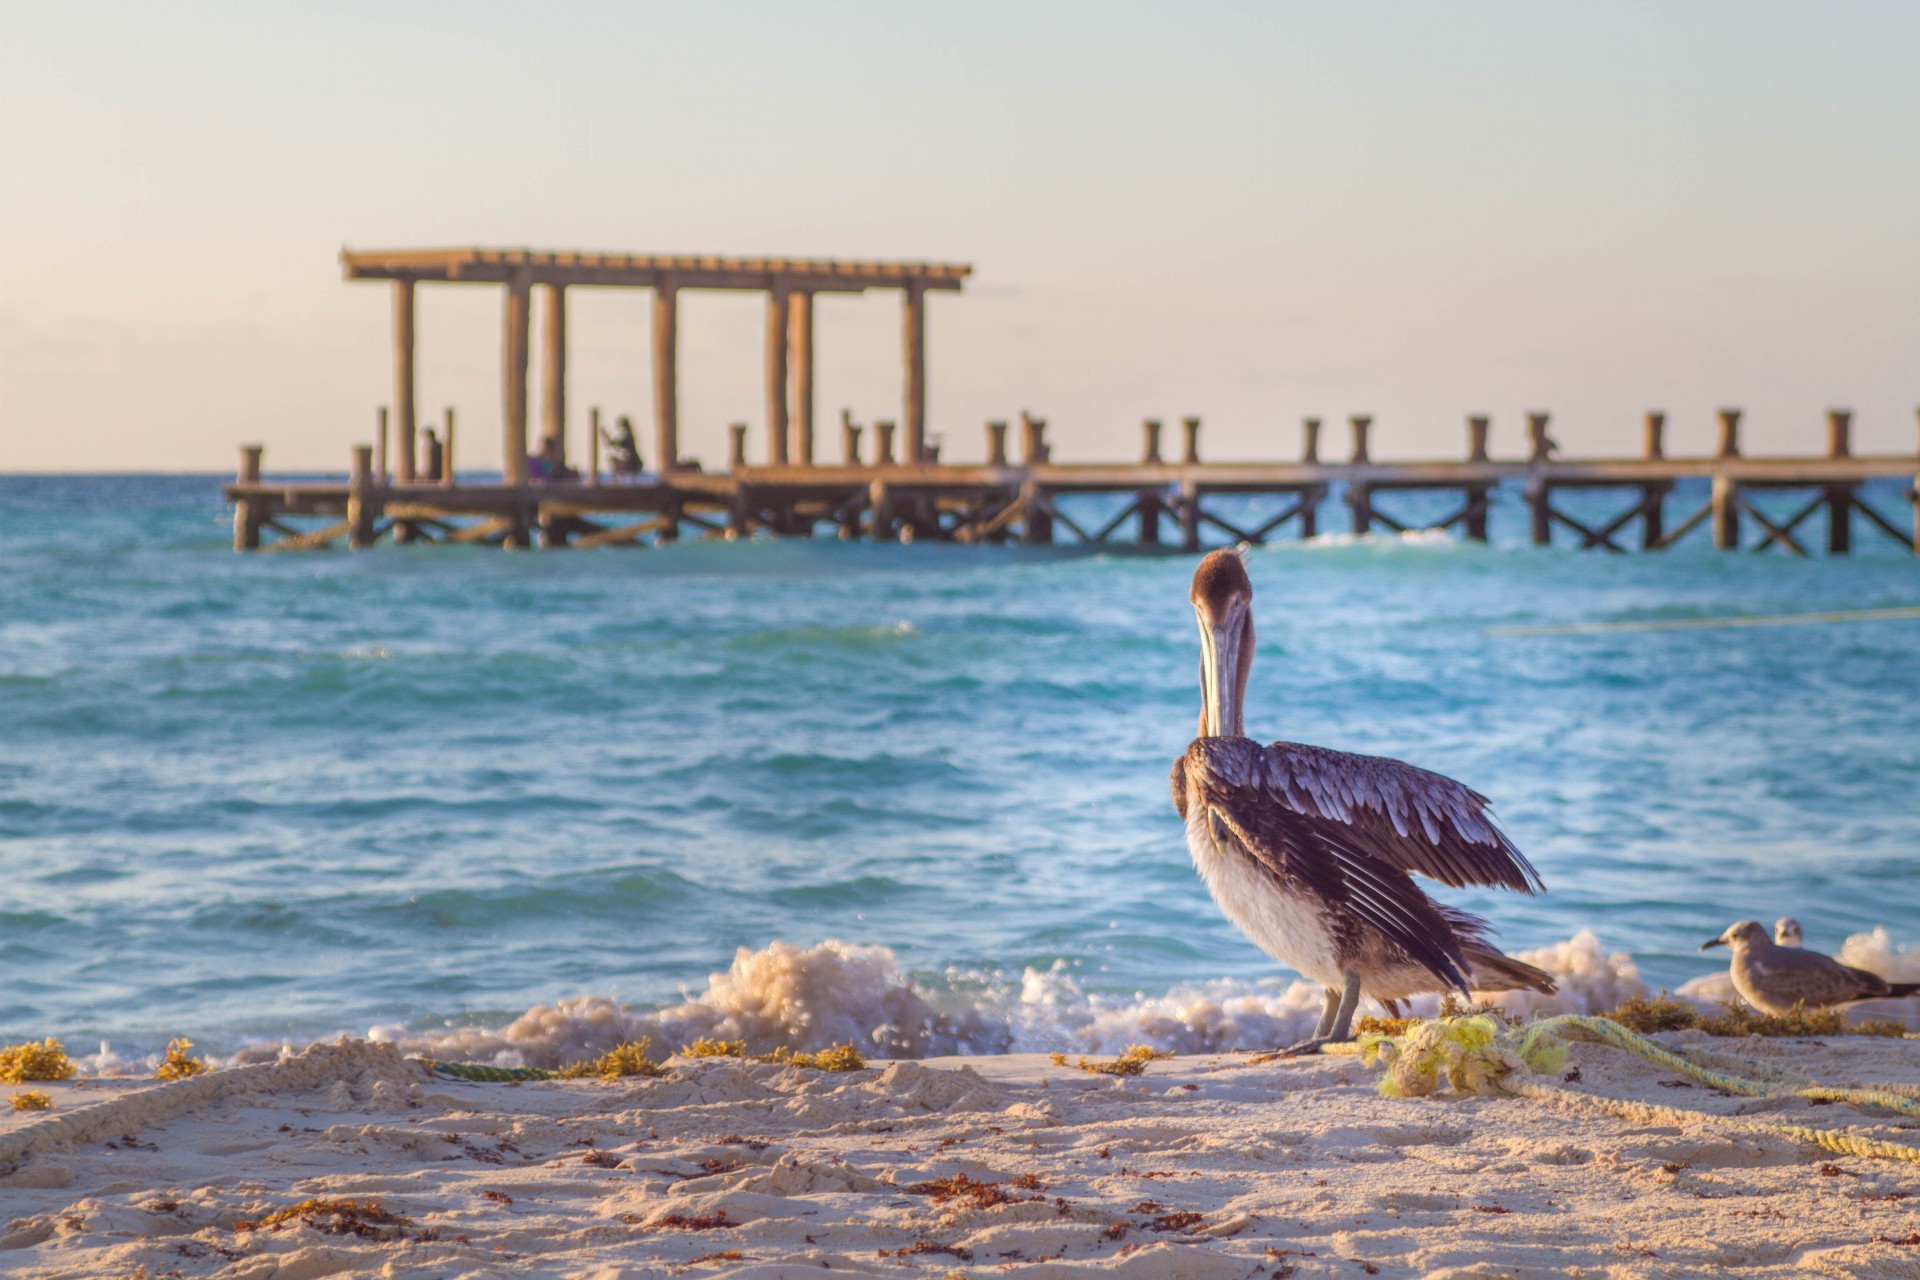 Playa del Carmen - Pelican